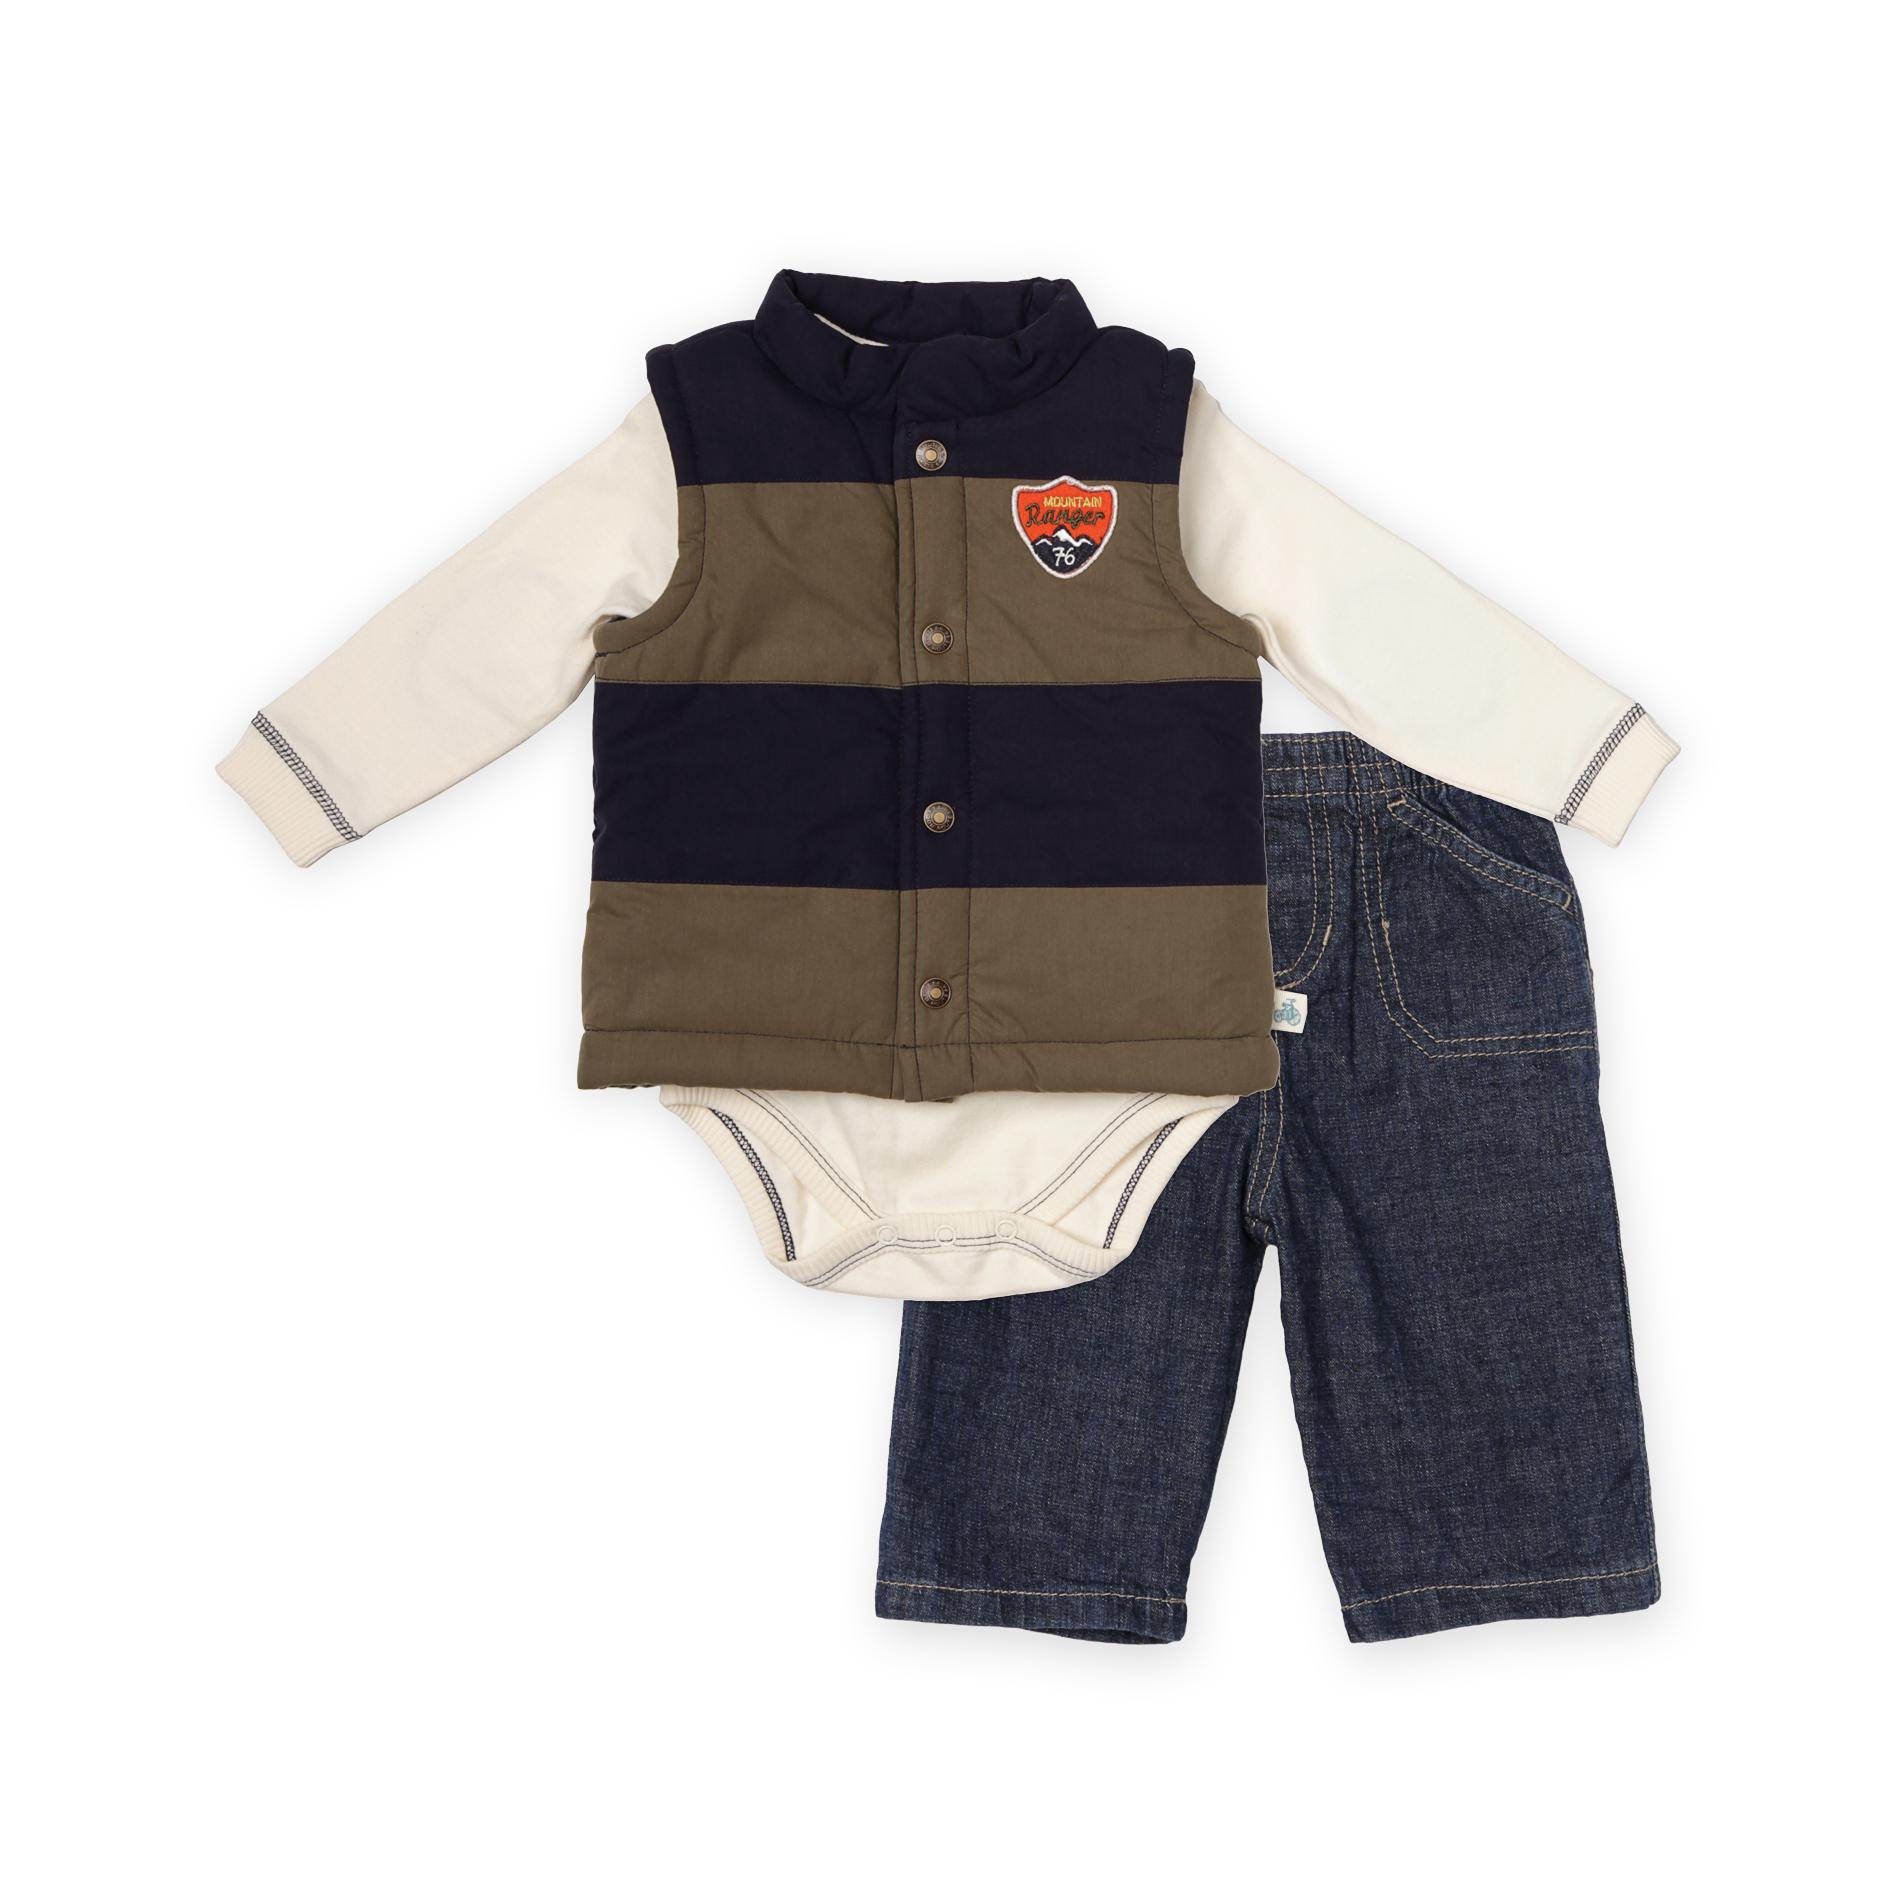 Route 66 Infant Boy's Bodysuit  Vest & Jeans - Rugby Stripe